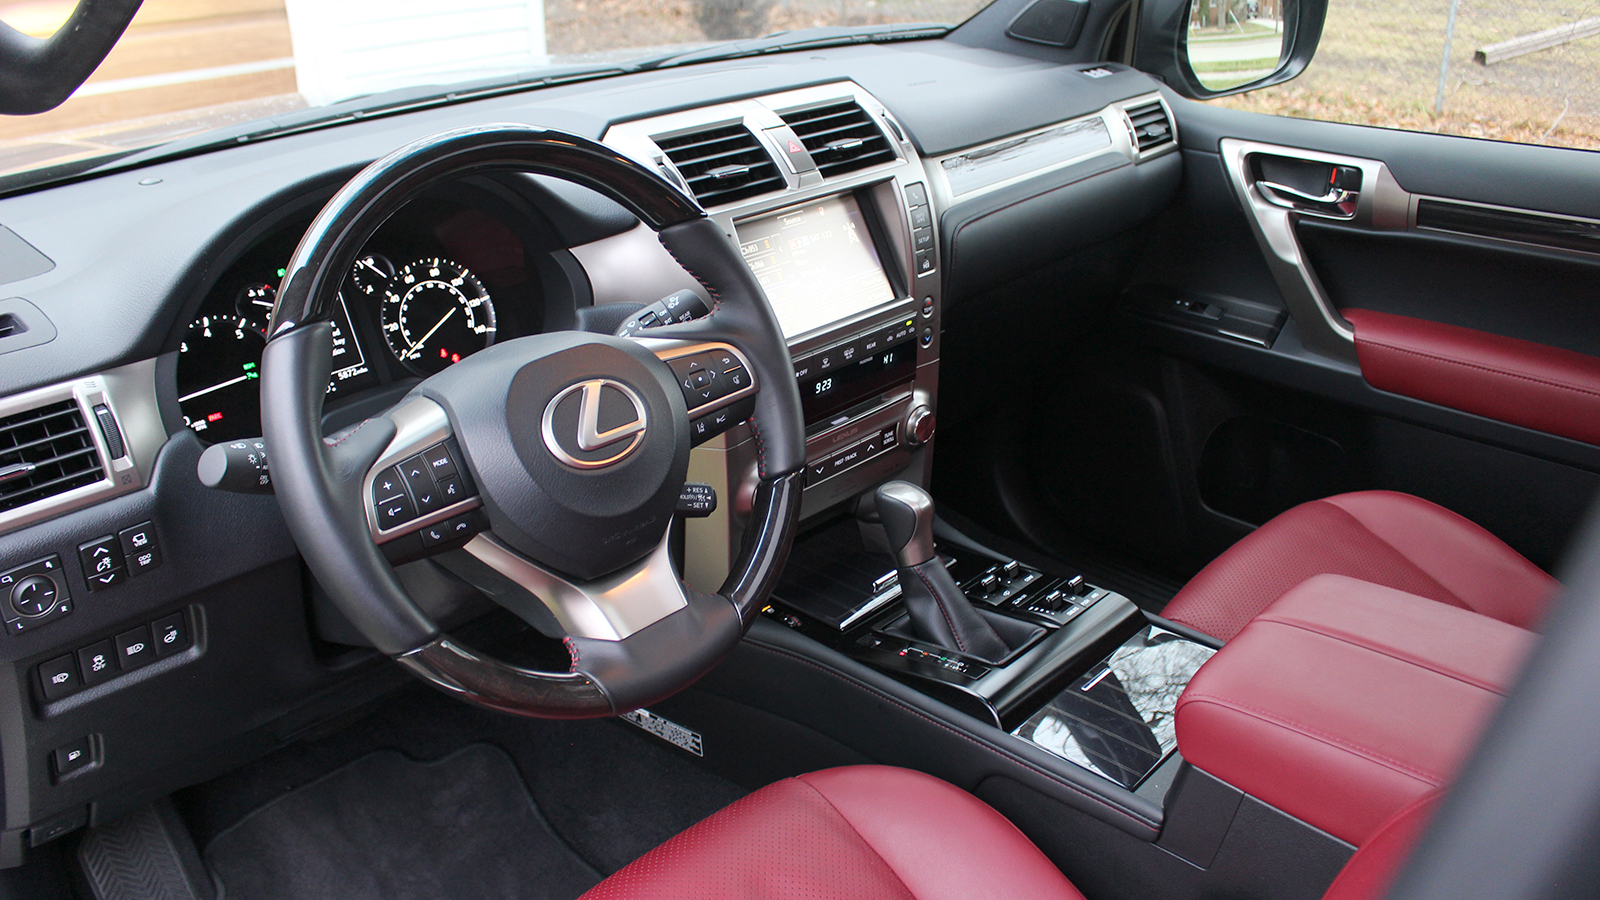 2021 Lexus Gx 460 Interior Review A Competent Cabin A Decade Ago